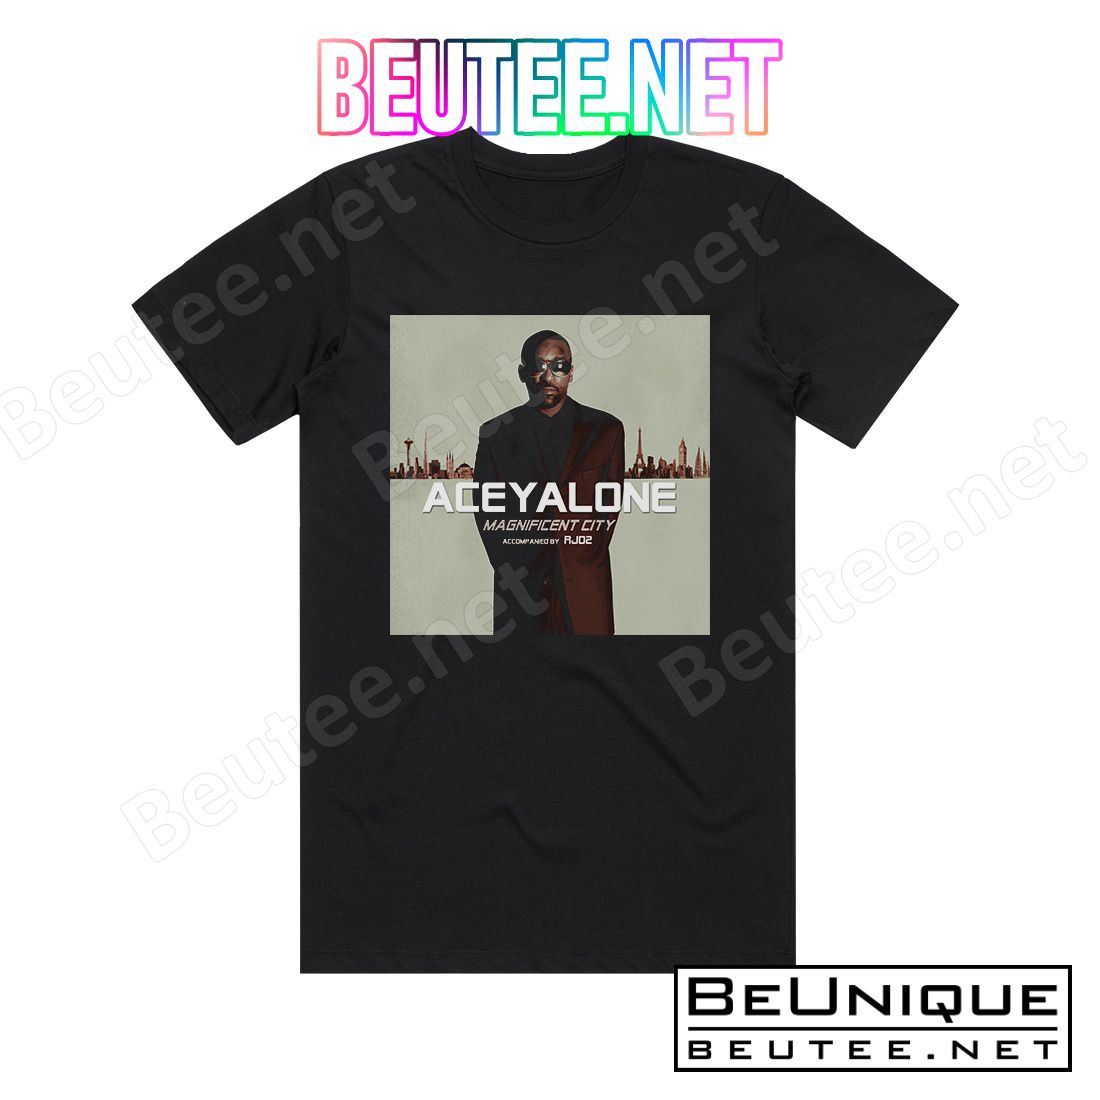 Aceyalone Magnificent City Album Cover T-Shirt